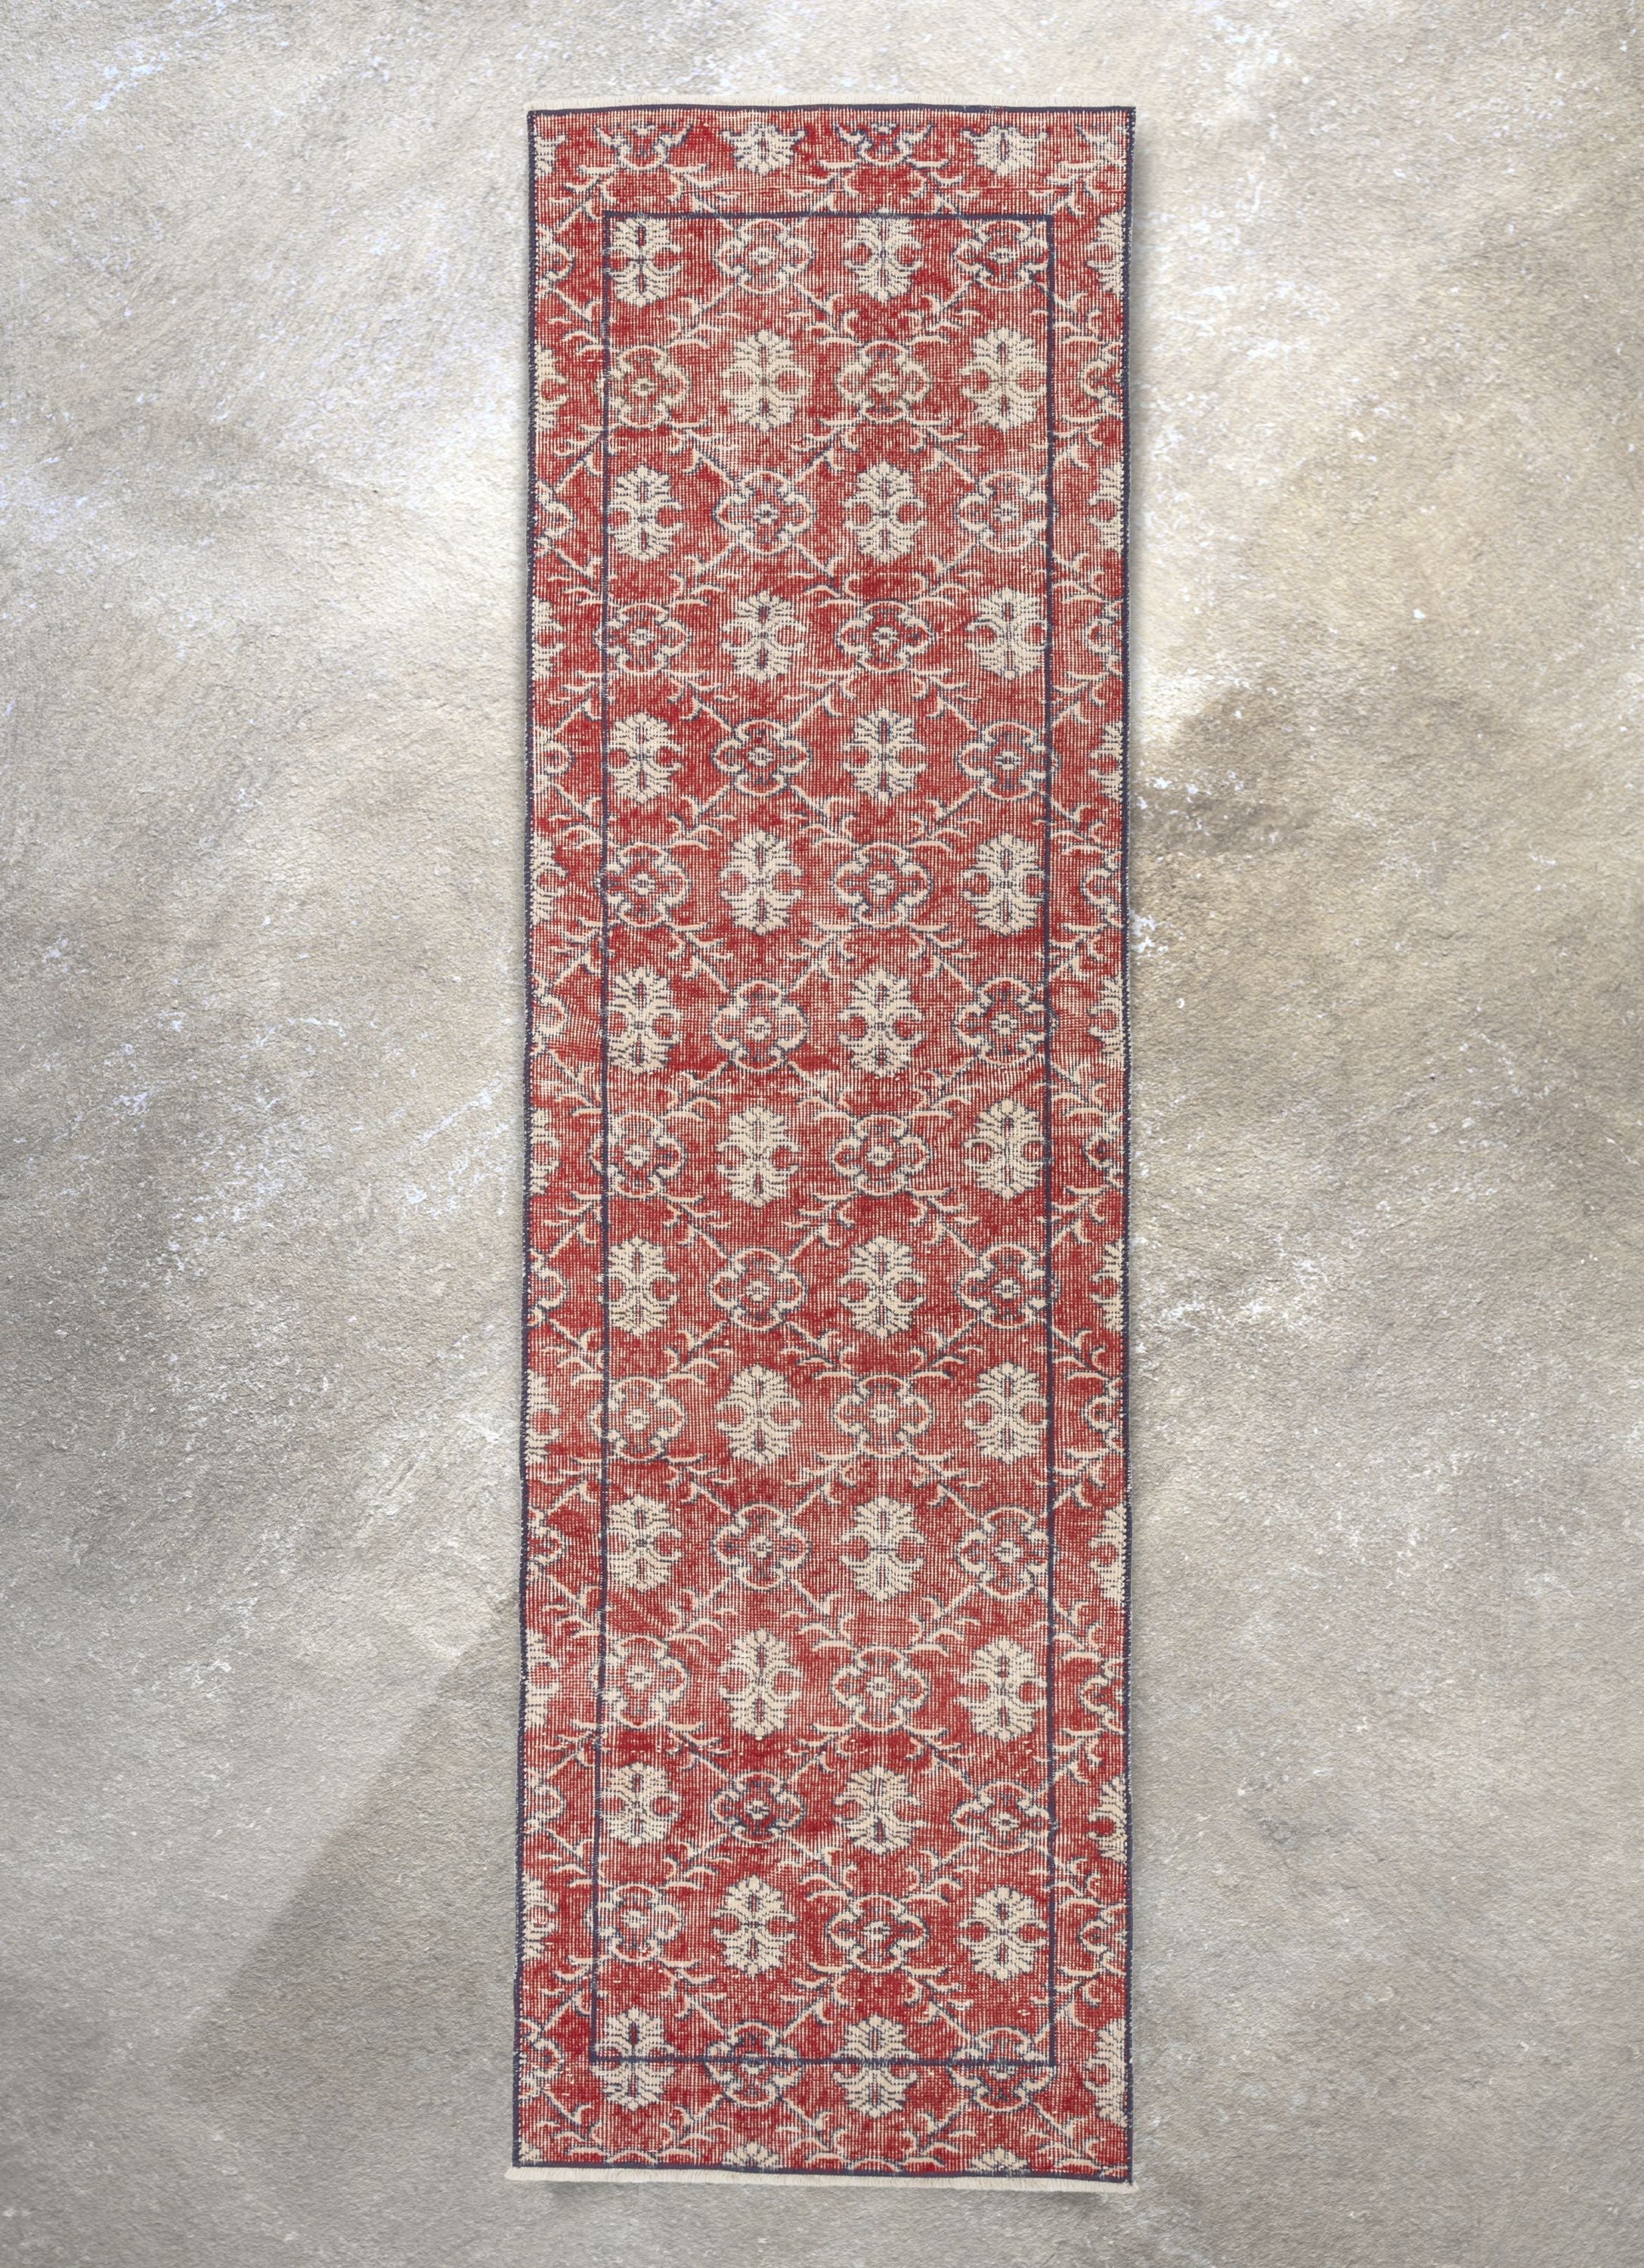 Nizzo Red & Navy Blue Persian Geometric Lattice Pattern One-of-a-Kind Handmade Wool Area Rug 2'7